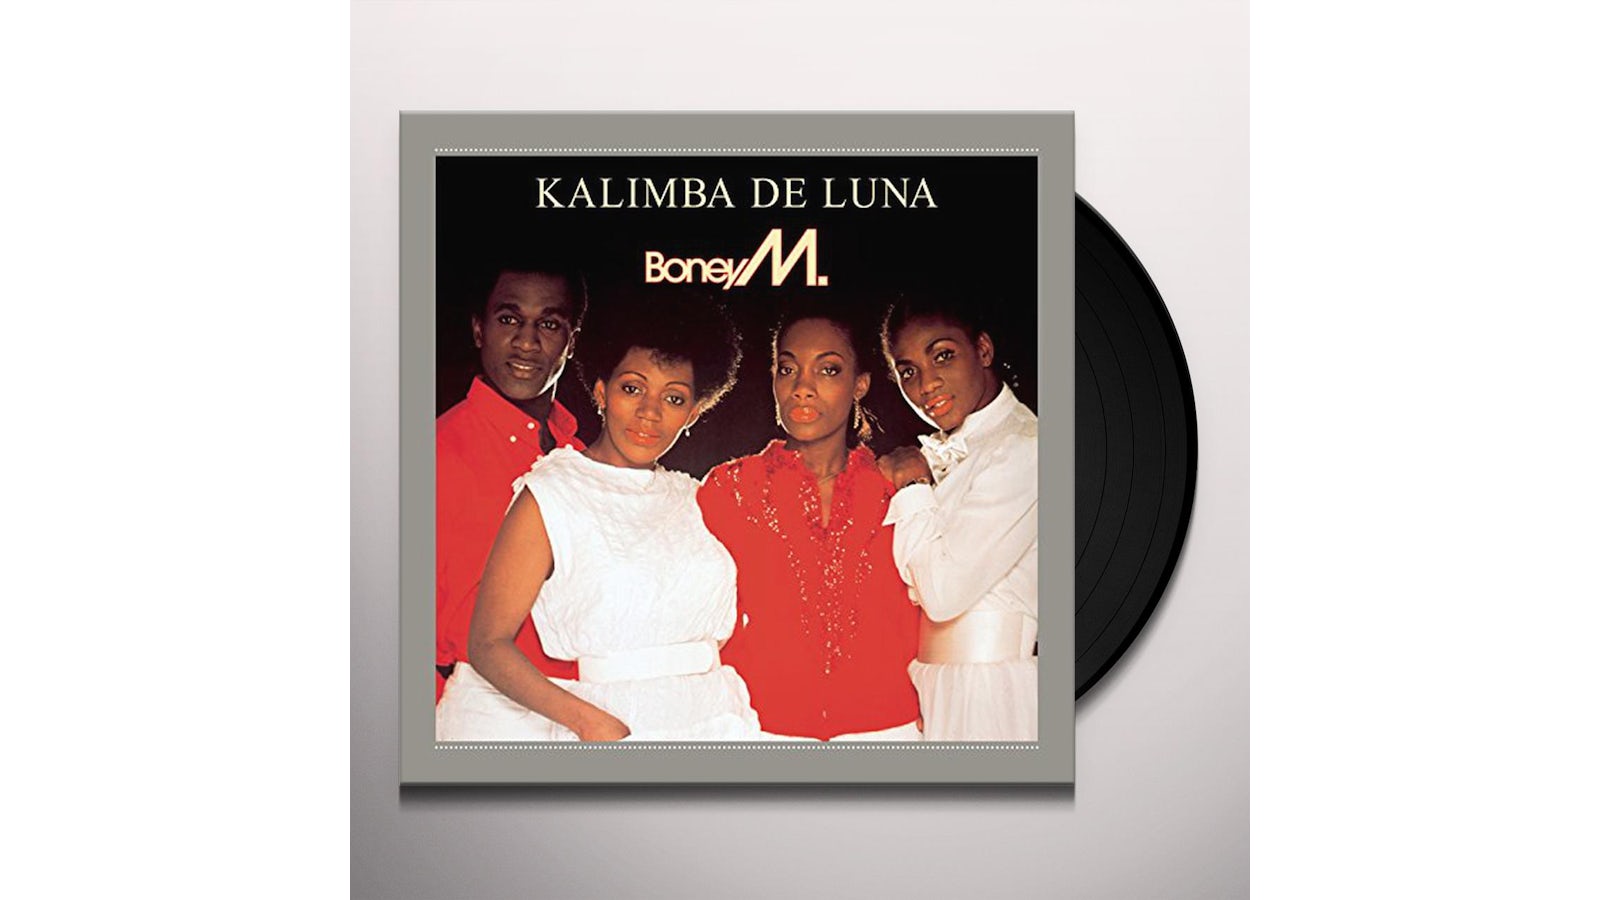 Калимба де луна песни. Boney m "Kalimba de Luna". Somewhere in the World Boney m. Бони м фото в молодости. Boney m Kalimba de Luna 1984.